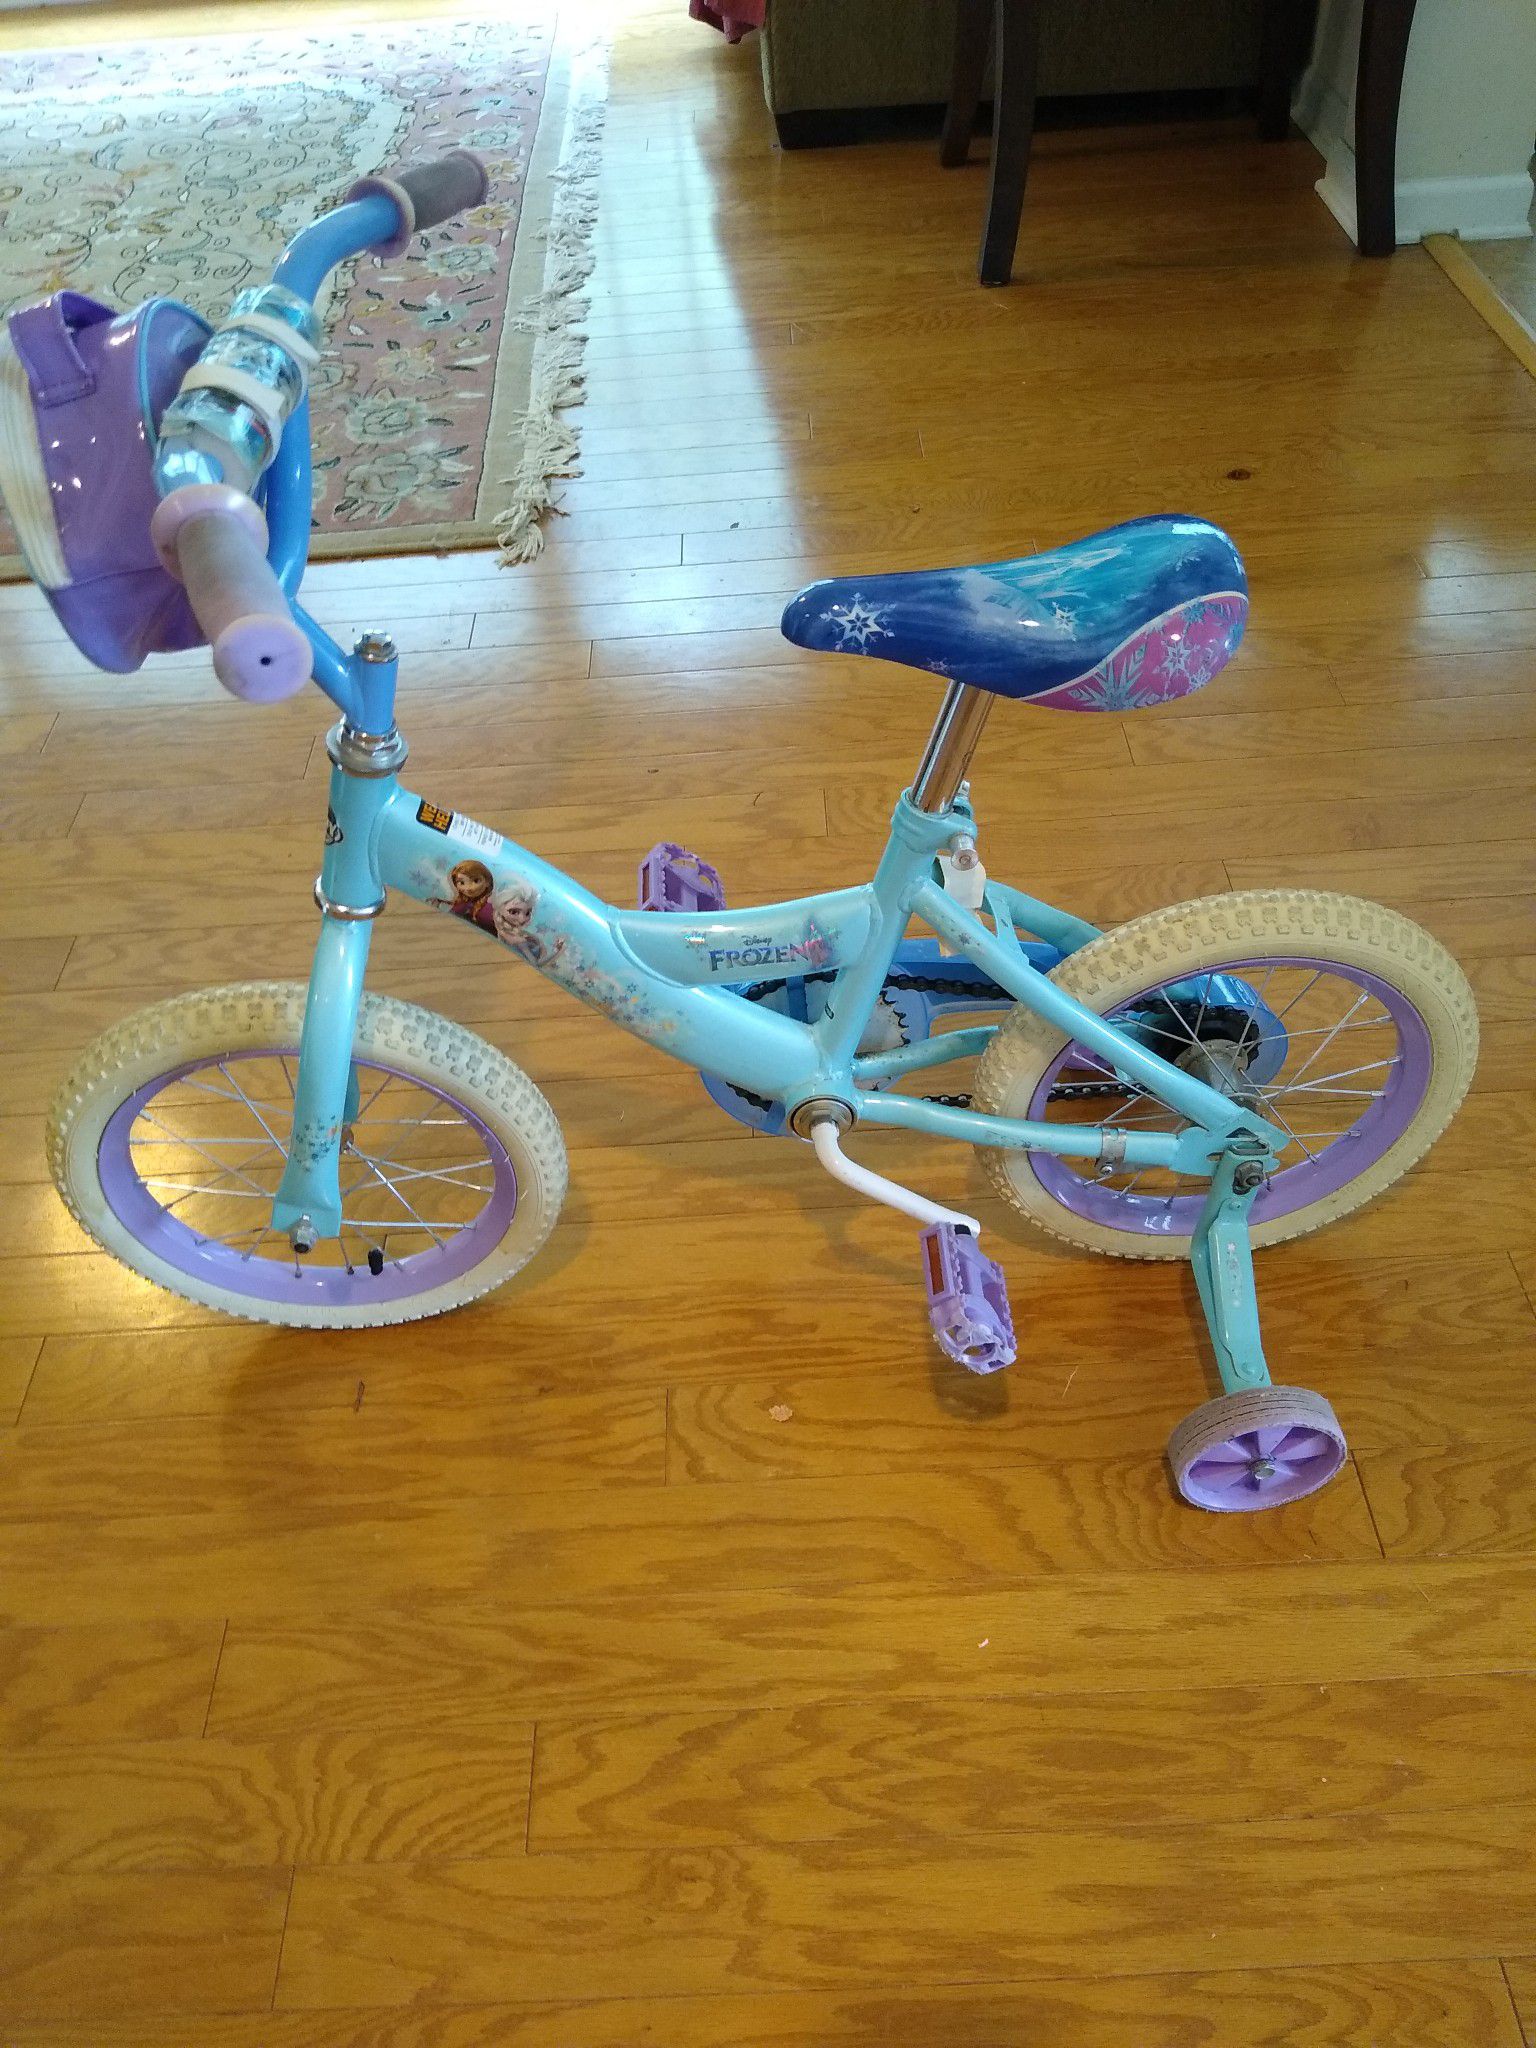 14 inch Disney frozen bike by Huffy for girls